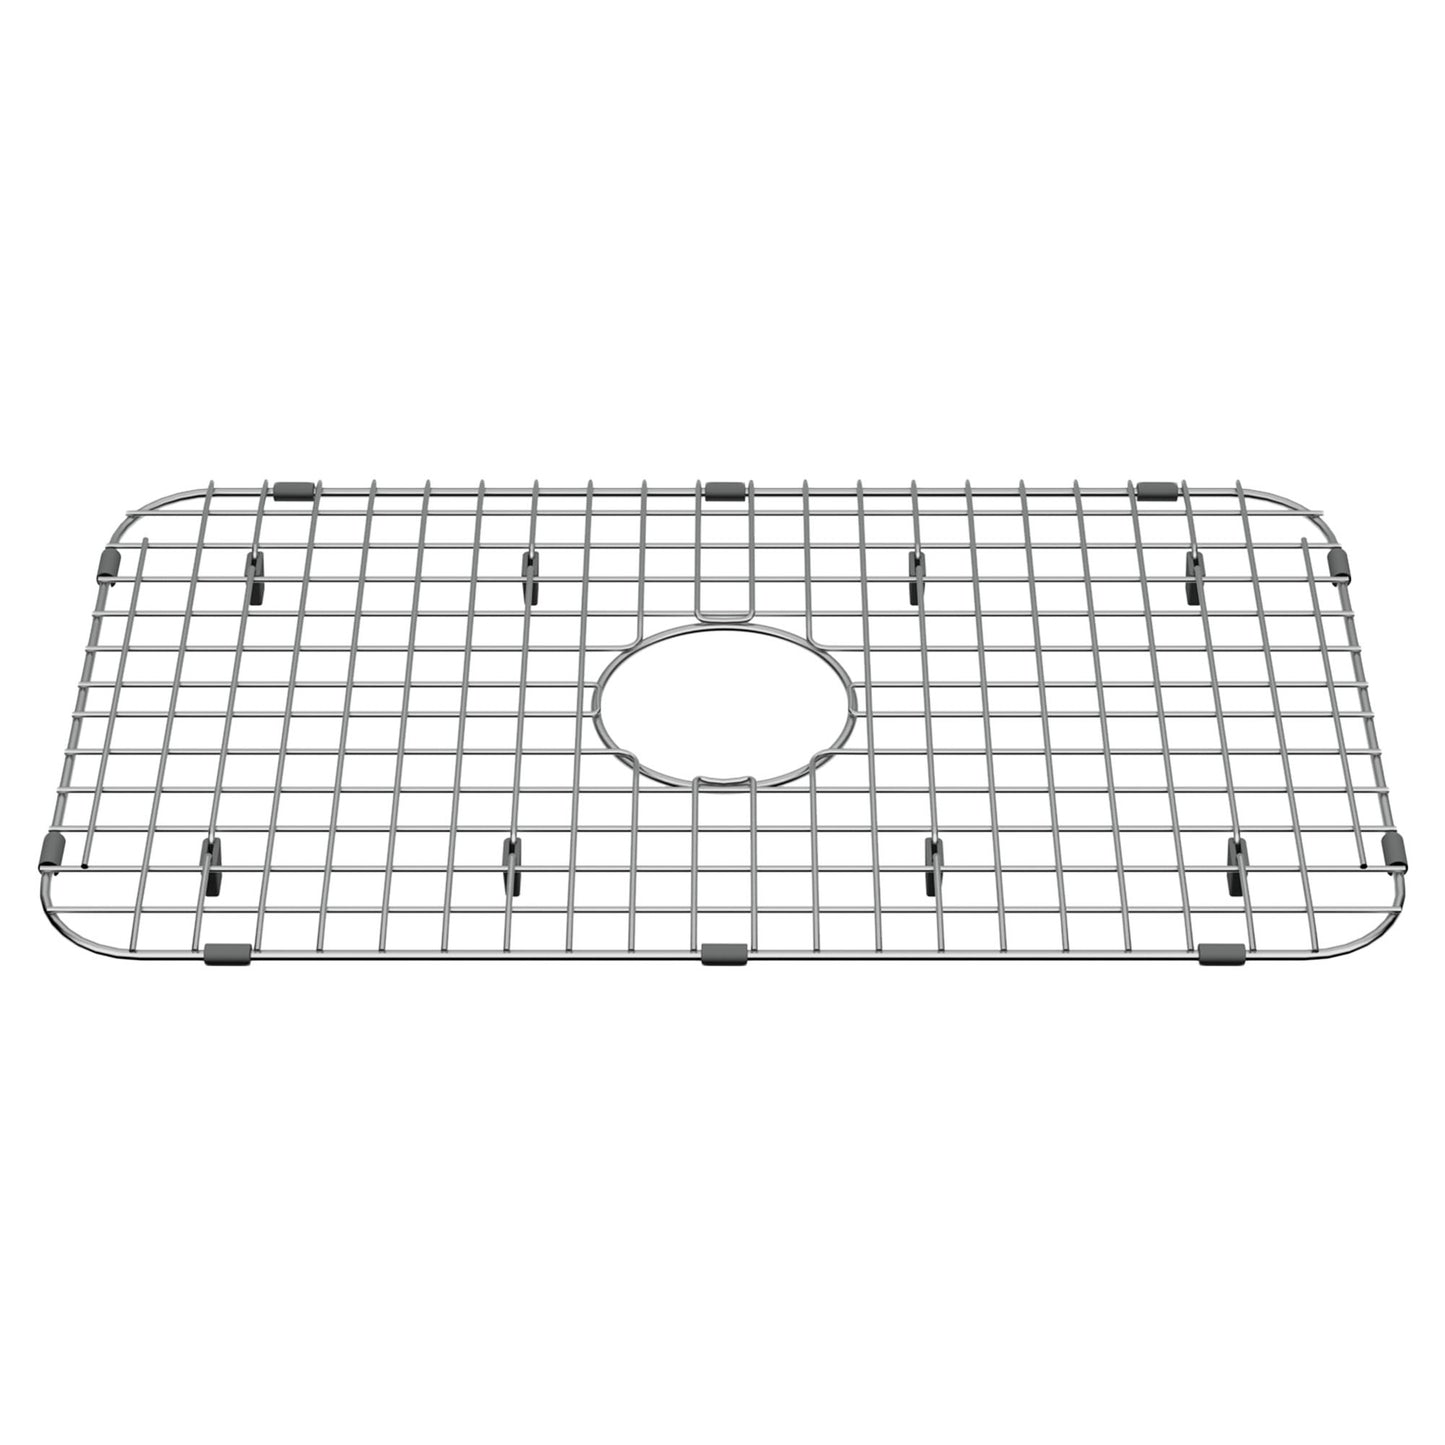 AMERICAN-STANDARD 8432000.075, Delancey 30-Inch Single Bowl Kitchen Sink Grid in Stainless Stl